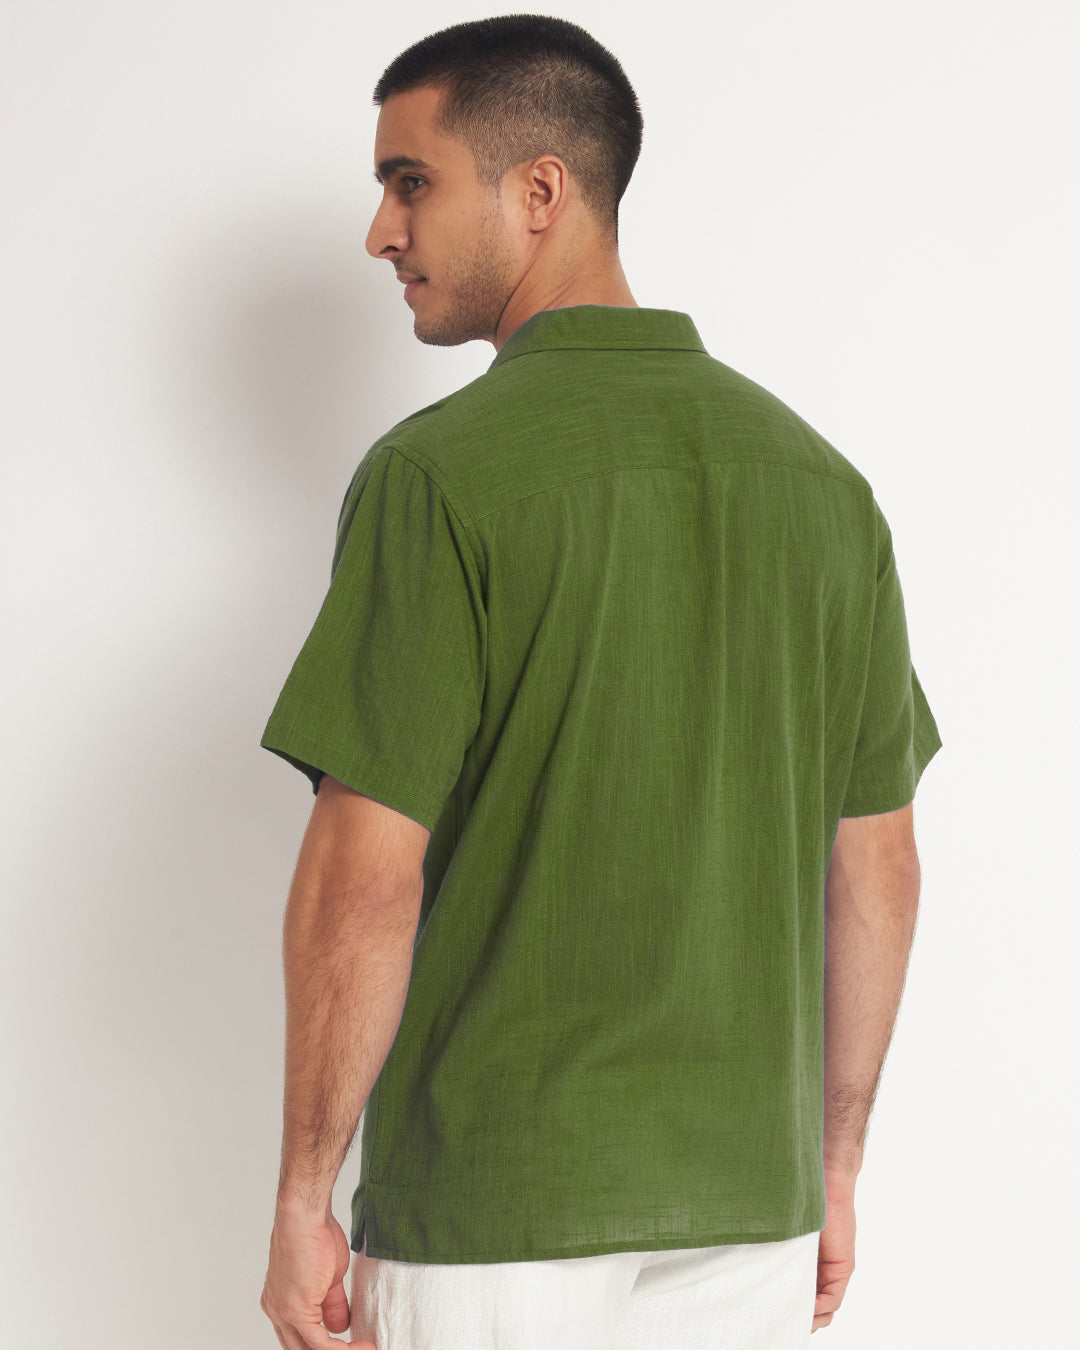 Classic Greening Spring Men's Half Sleeves Shirt